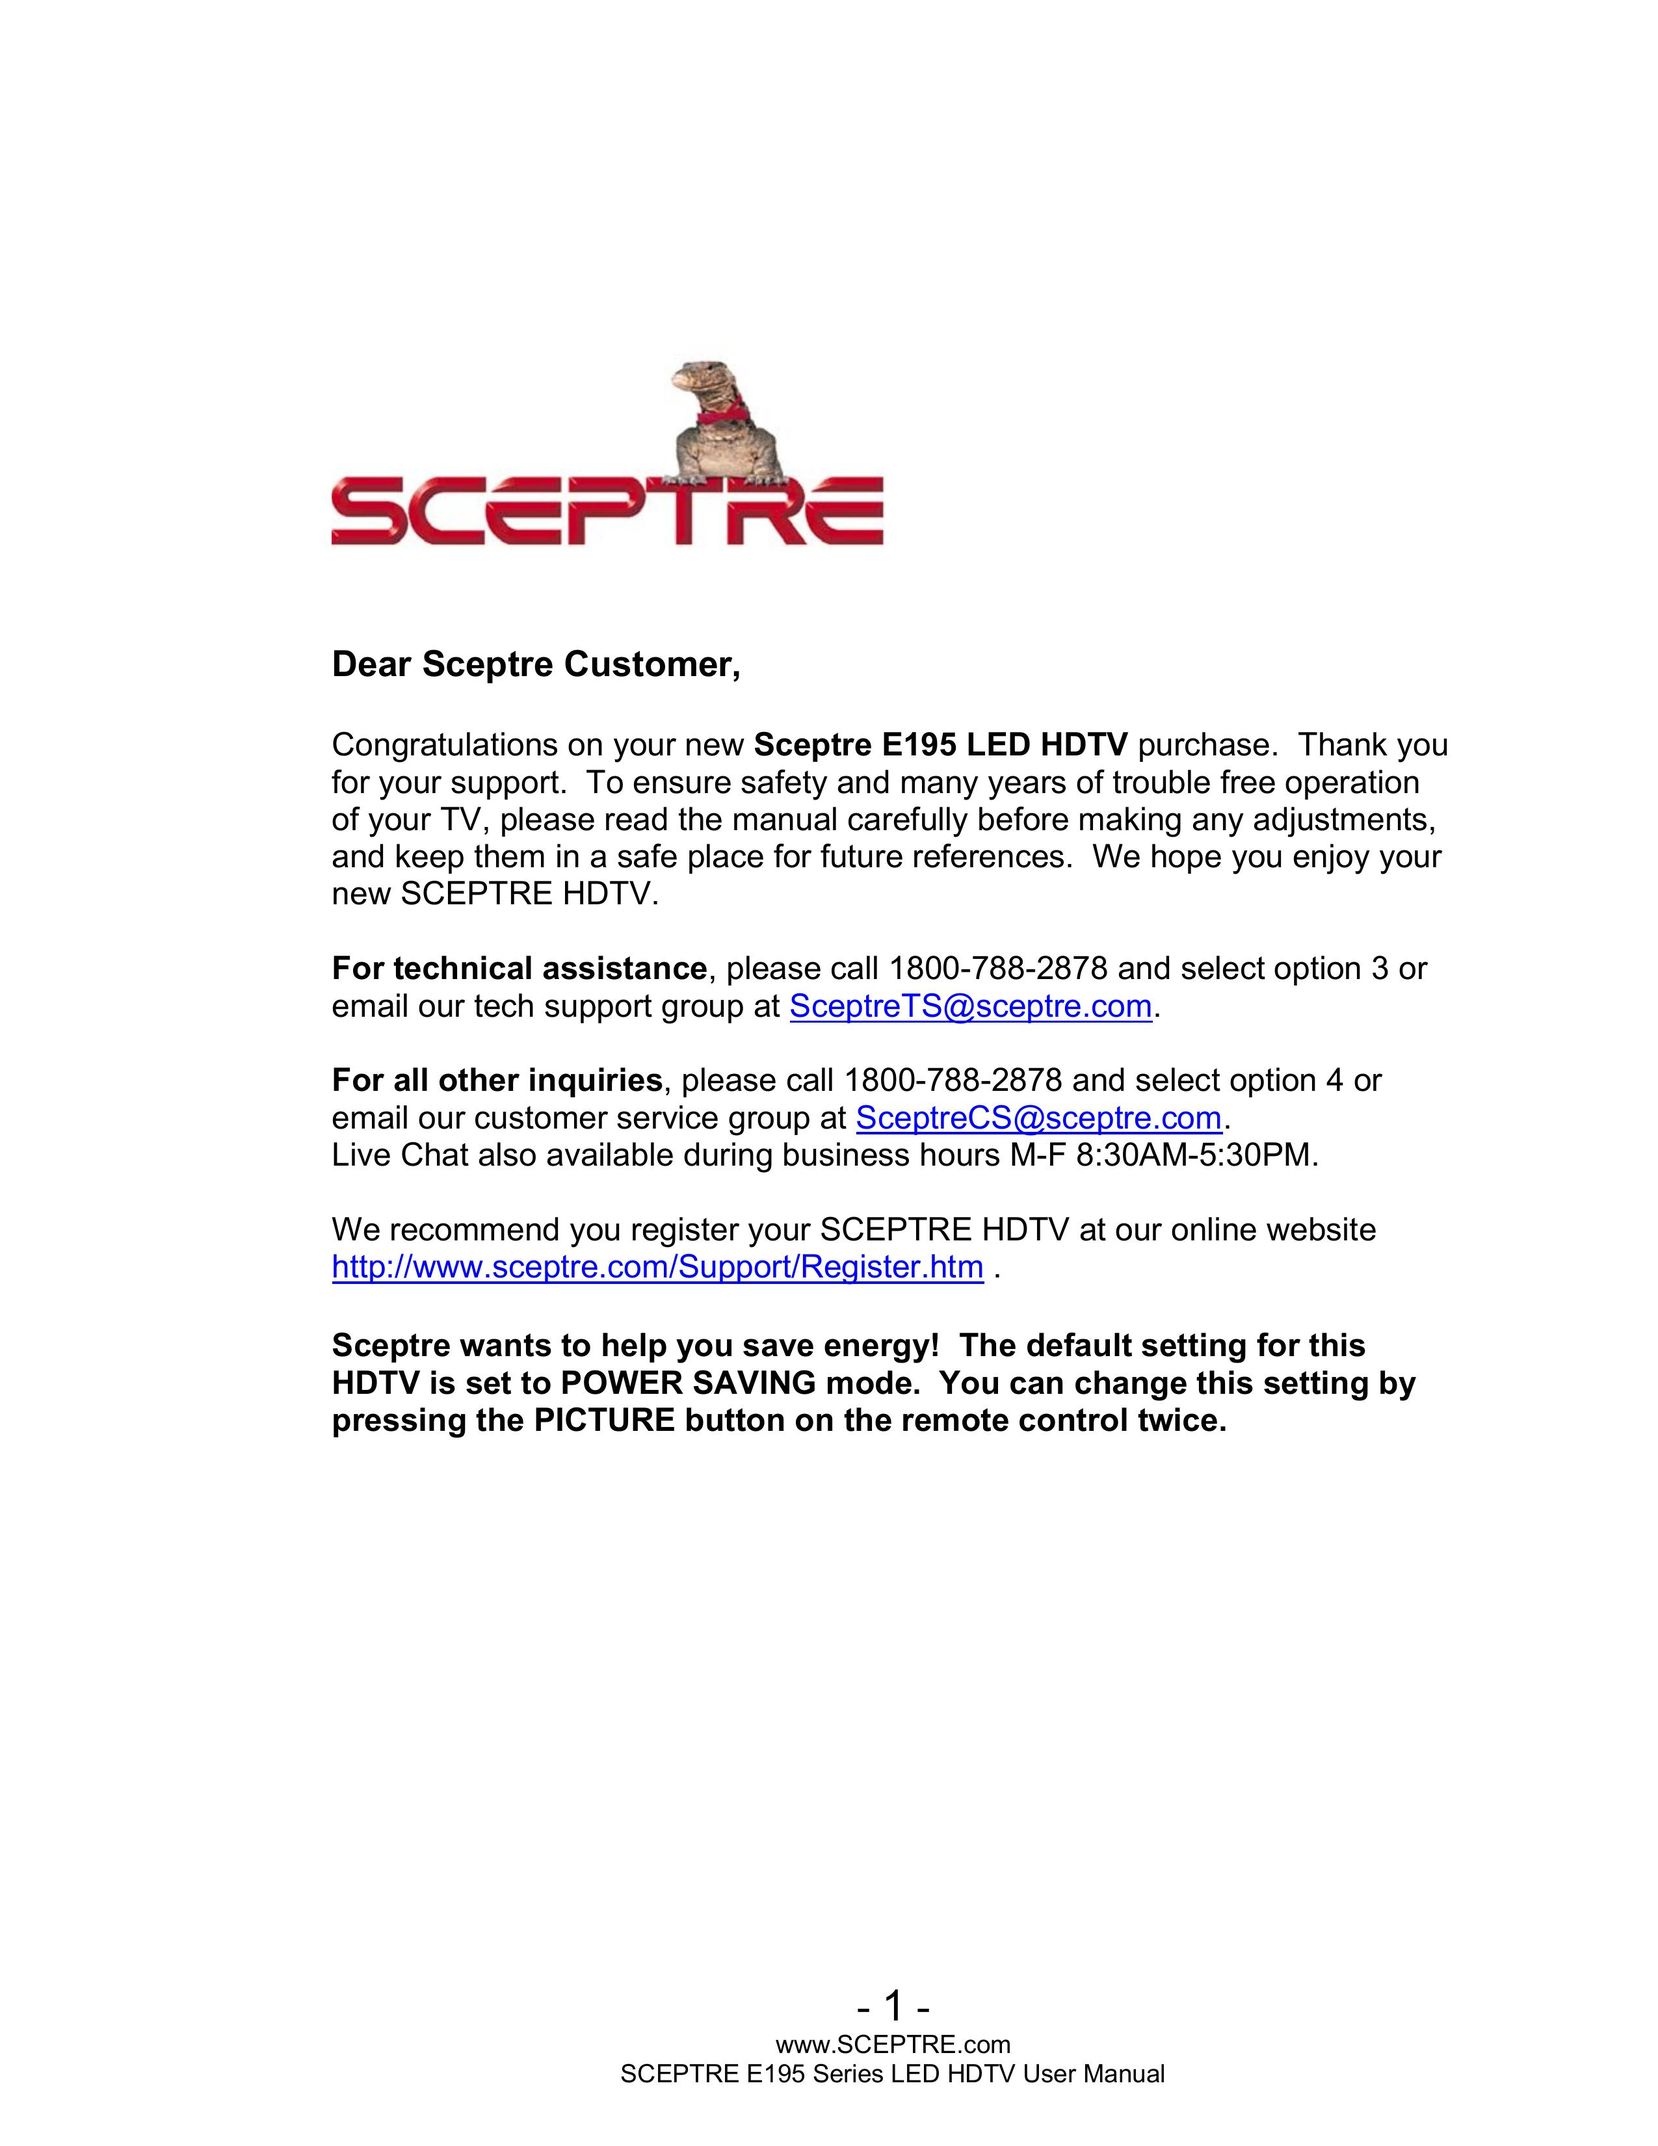 Sceptre Technologies SCEPTRE LED HDTV Flat Panel Television User Manual